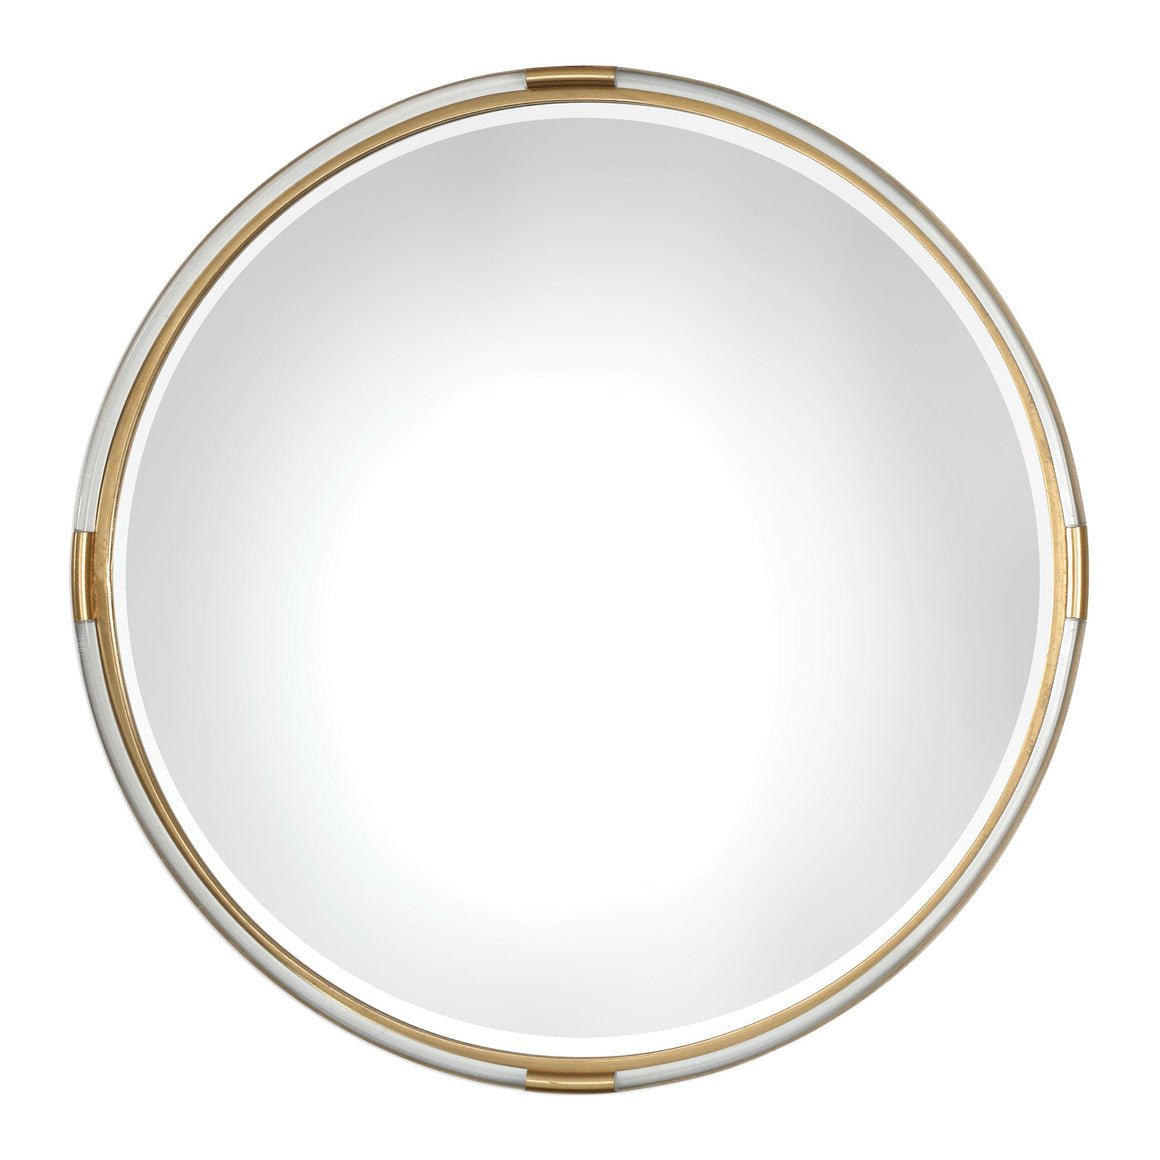 Mackai Round Gold Mirror - taylor ray decor